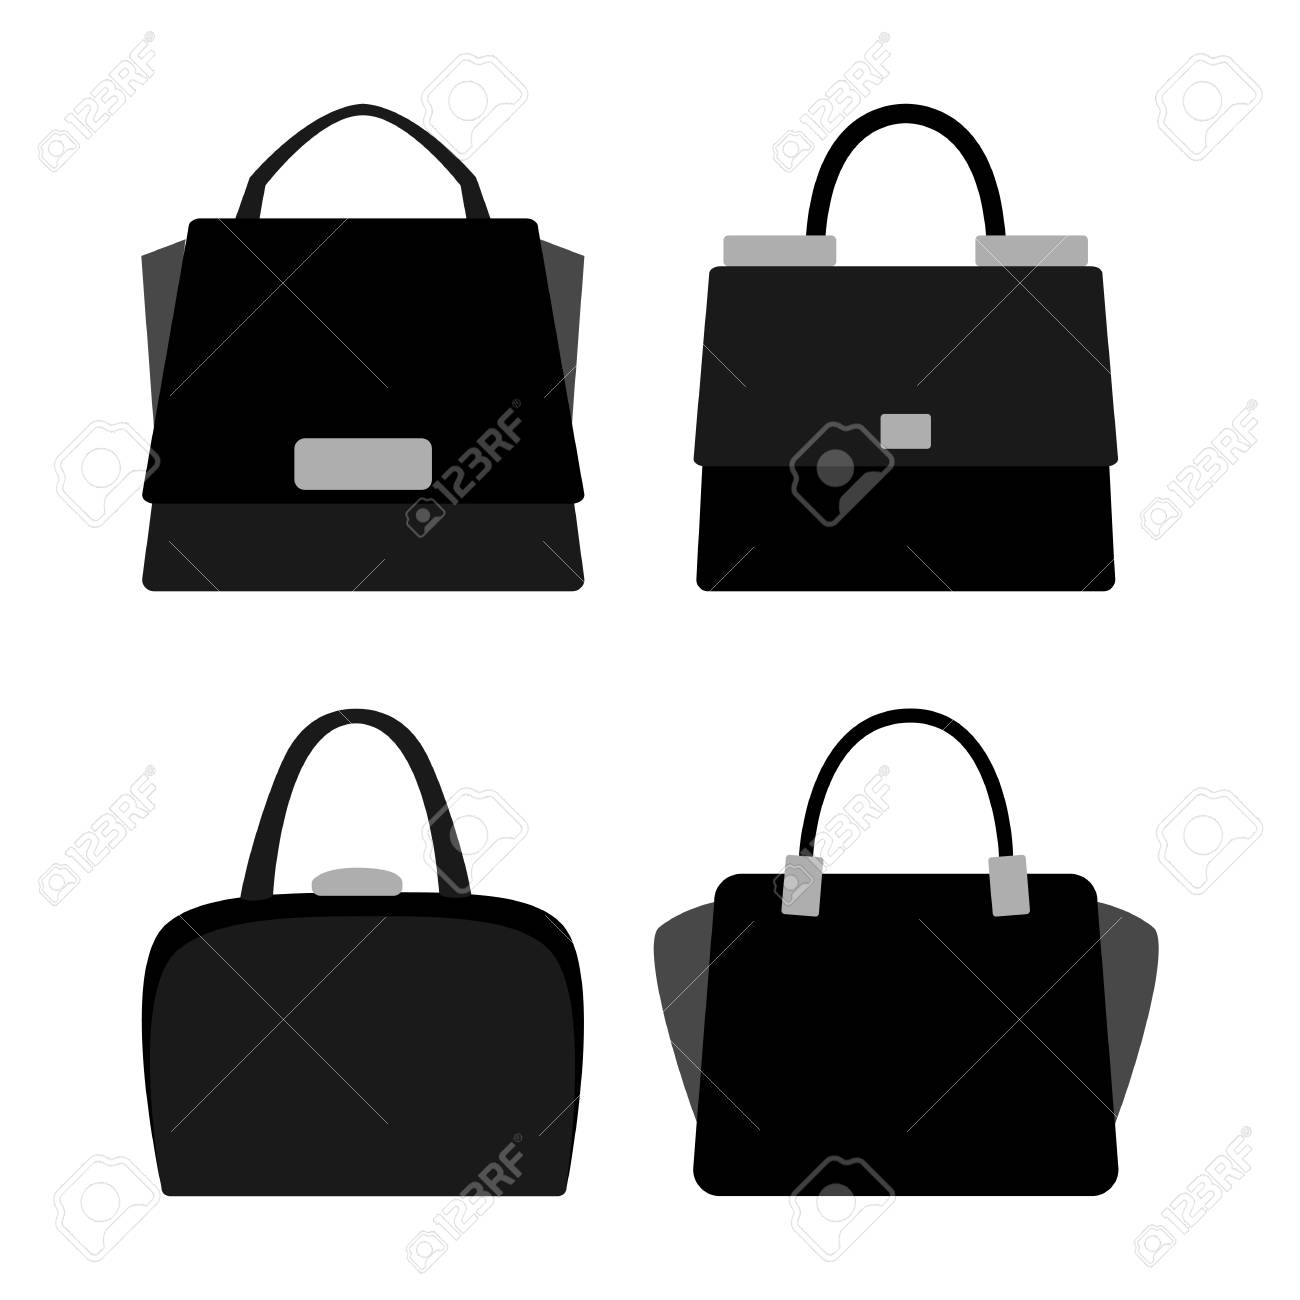 Women Bag Clipart monochrome